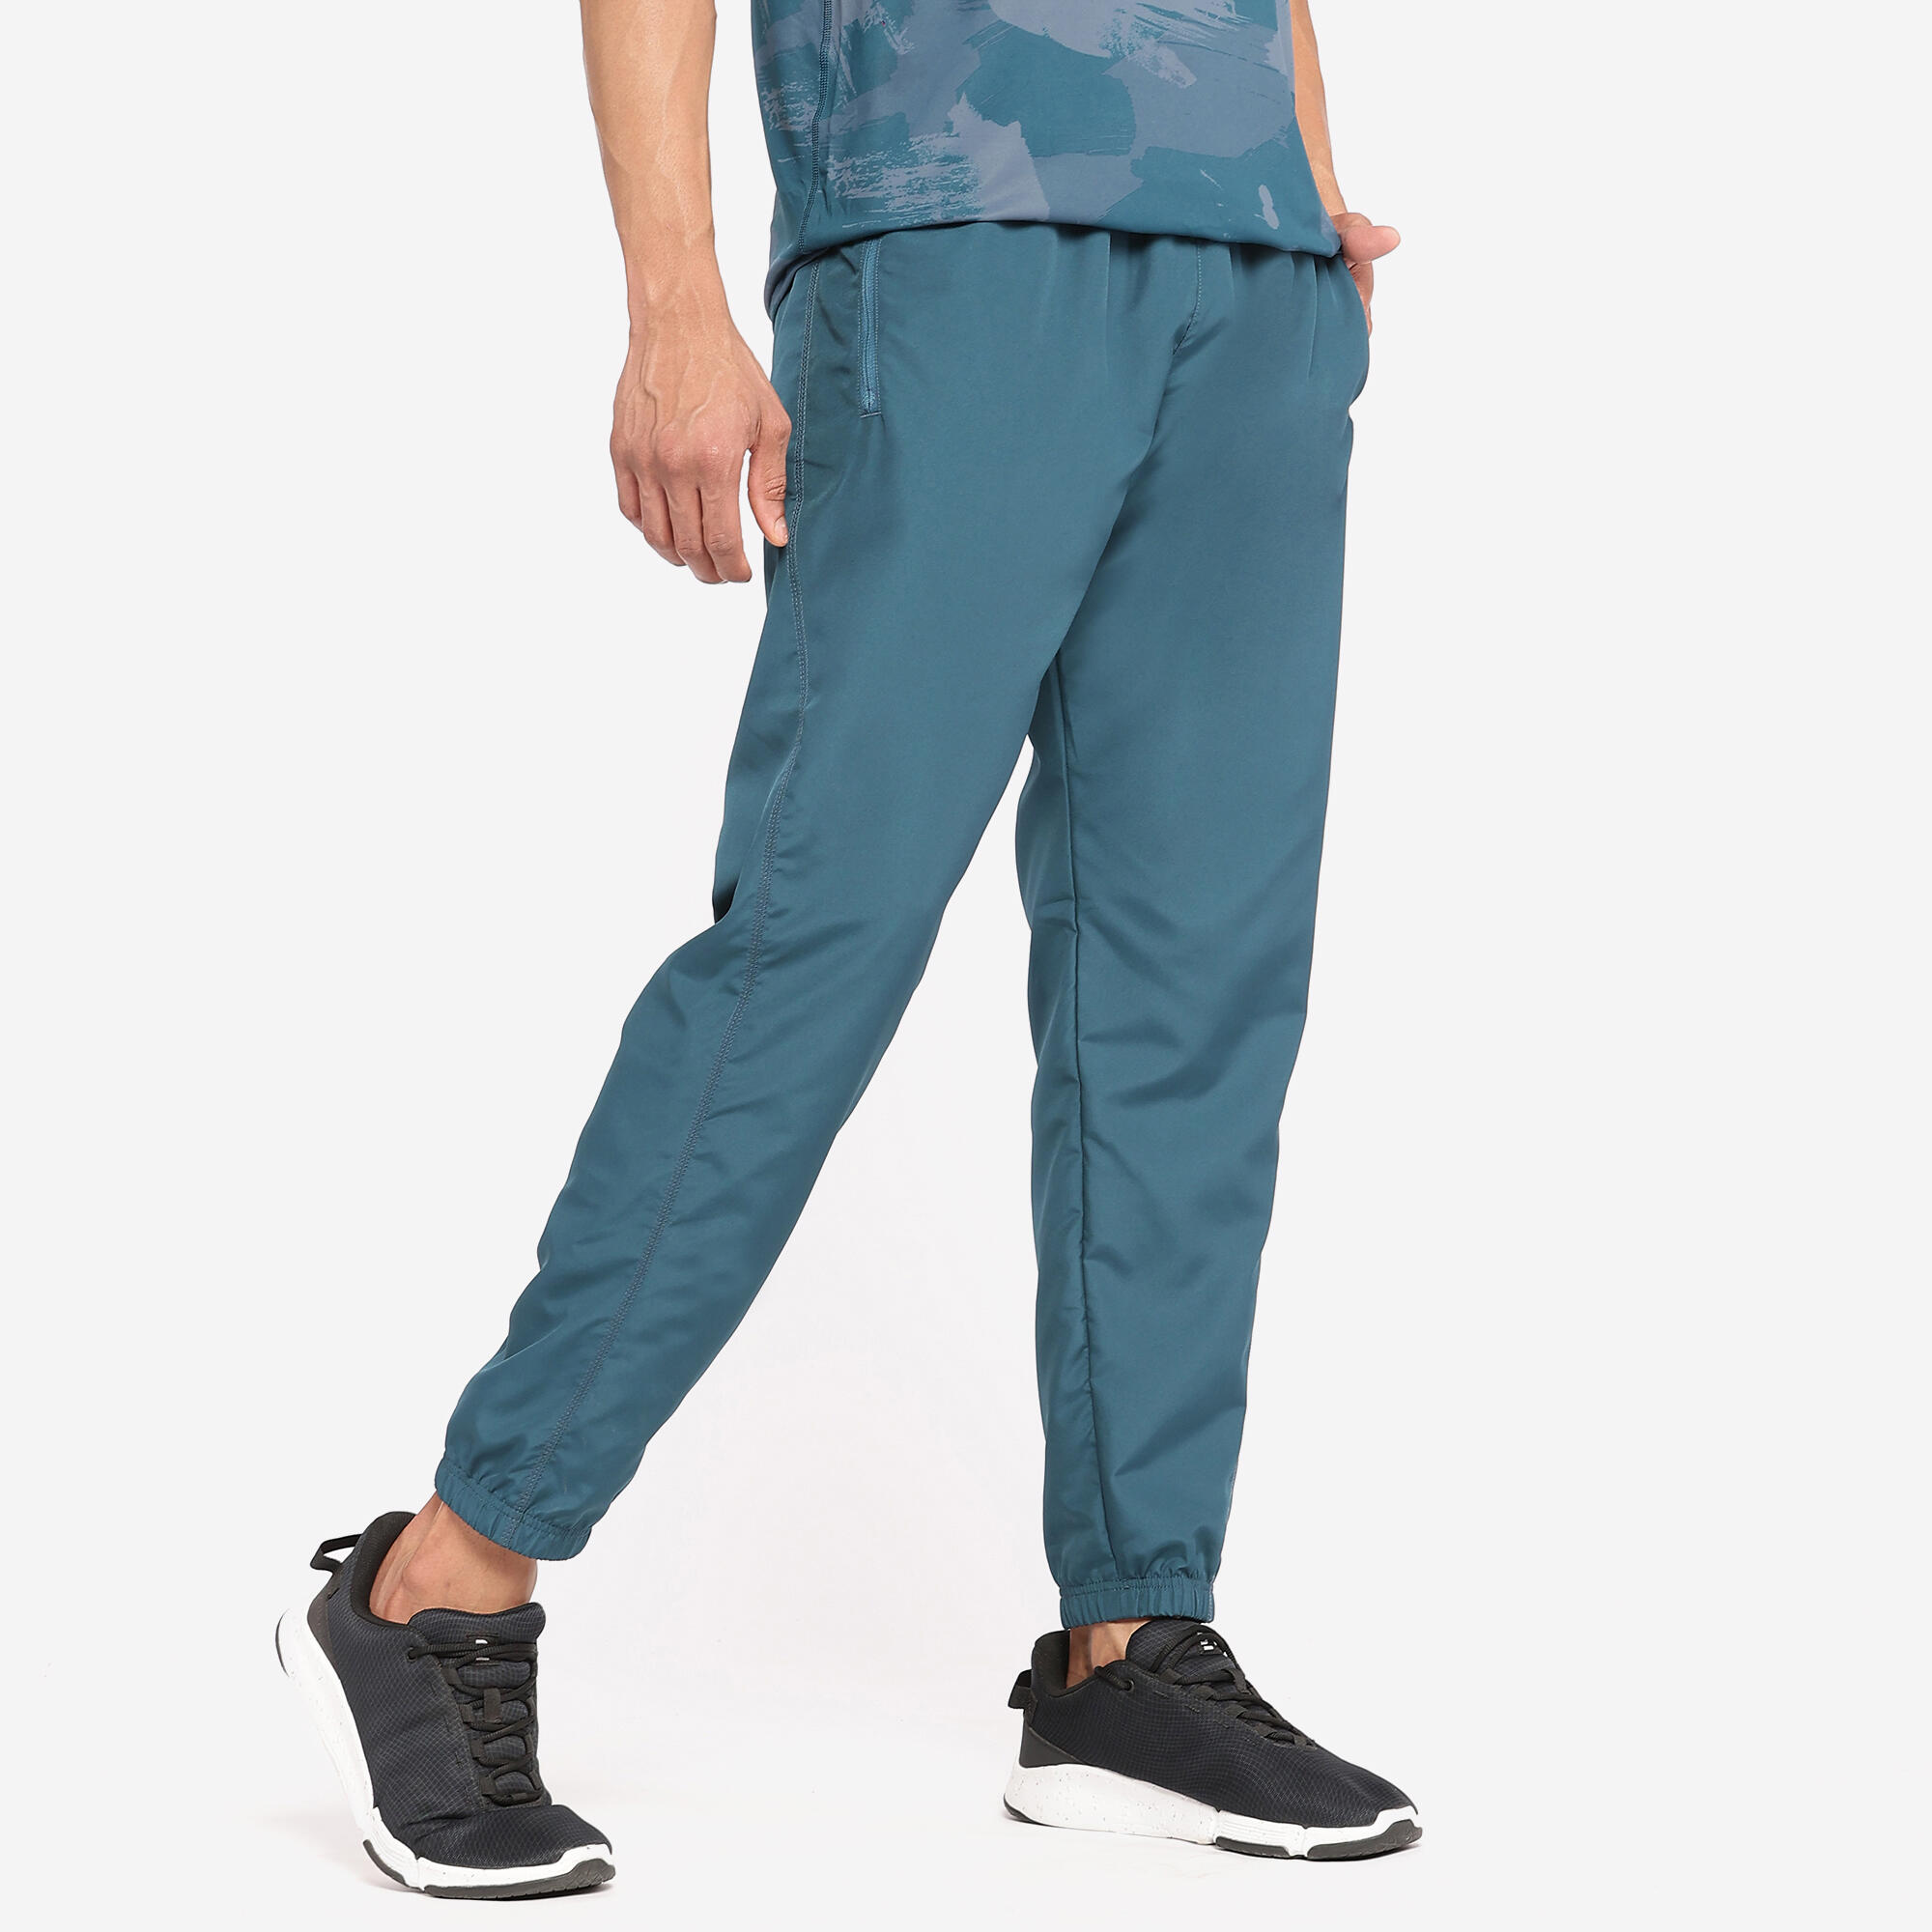 DOMYOS by Decathlon Solid Women Blue Track Pants - Buy Domyos Blue